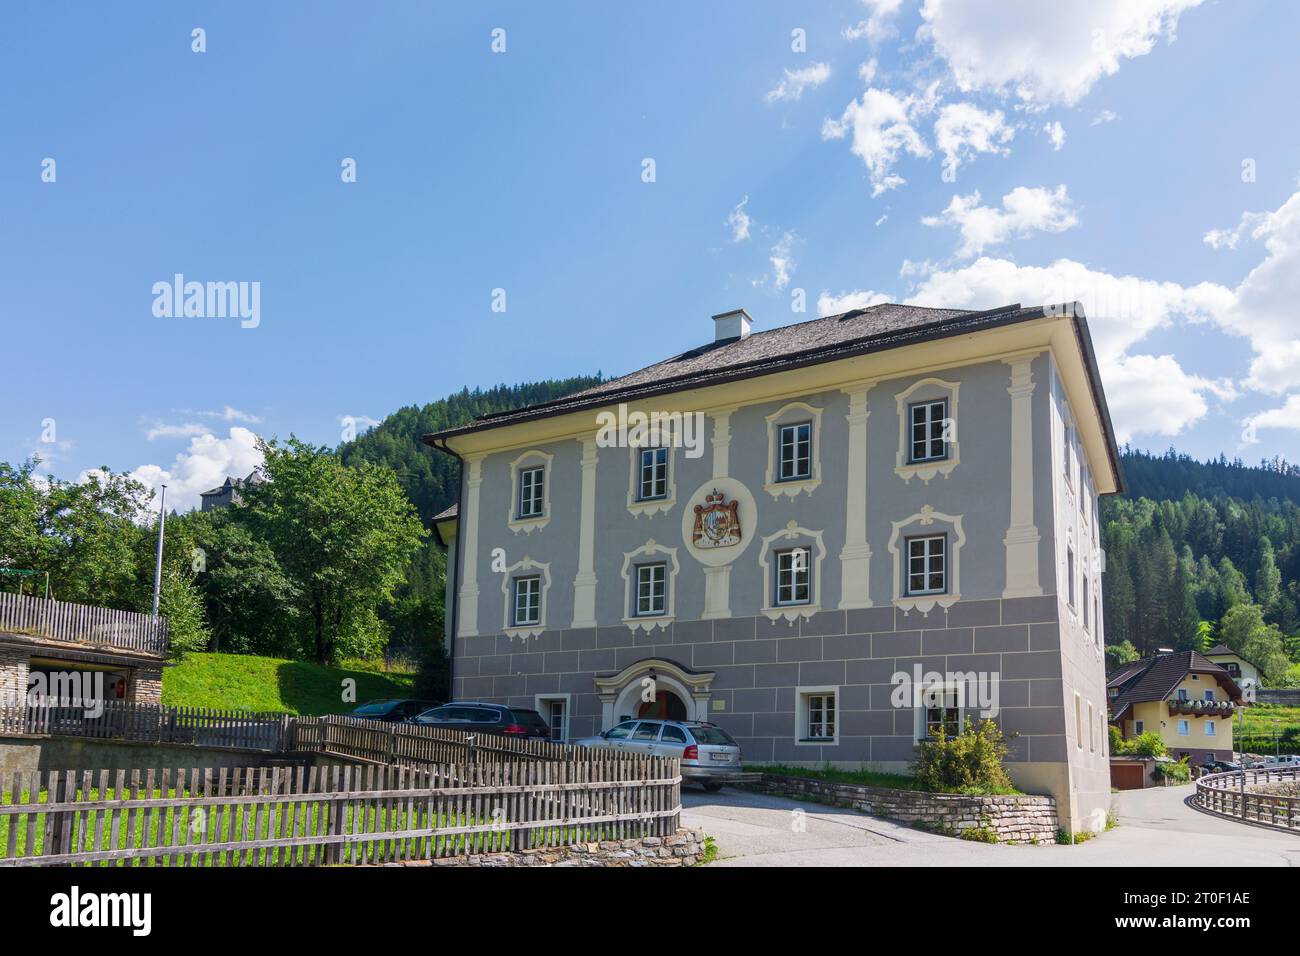 Ramingstein, Schloss Wintergrün Palace in Lungau, Salzburg, Austria Stock Photo